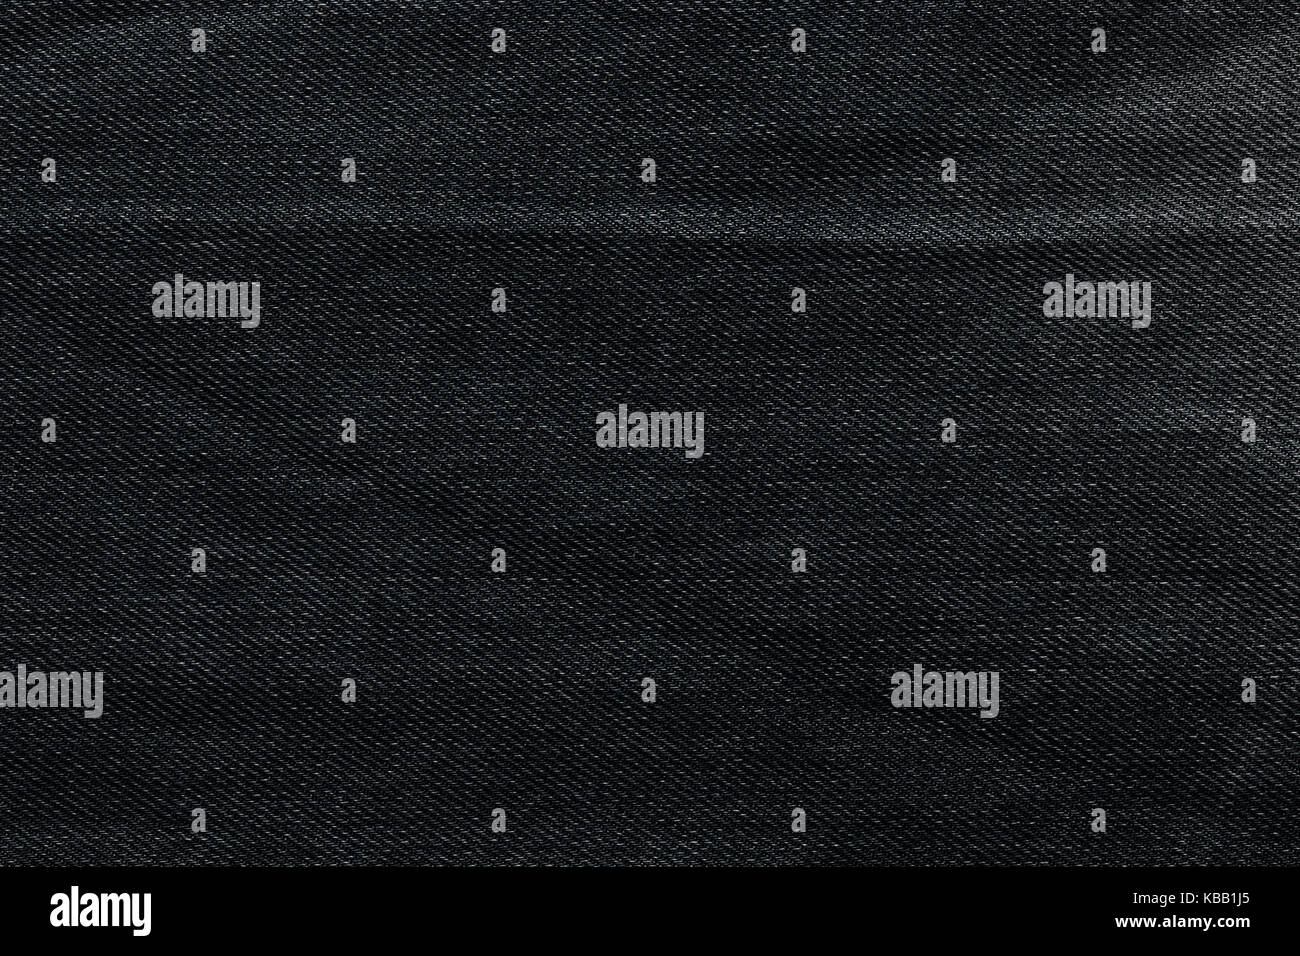 Black background, denim jeans background. Jeans texture, fabric. Stock Photo